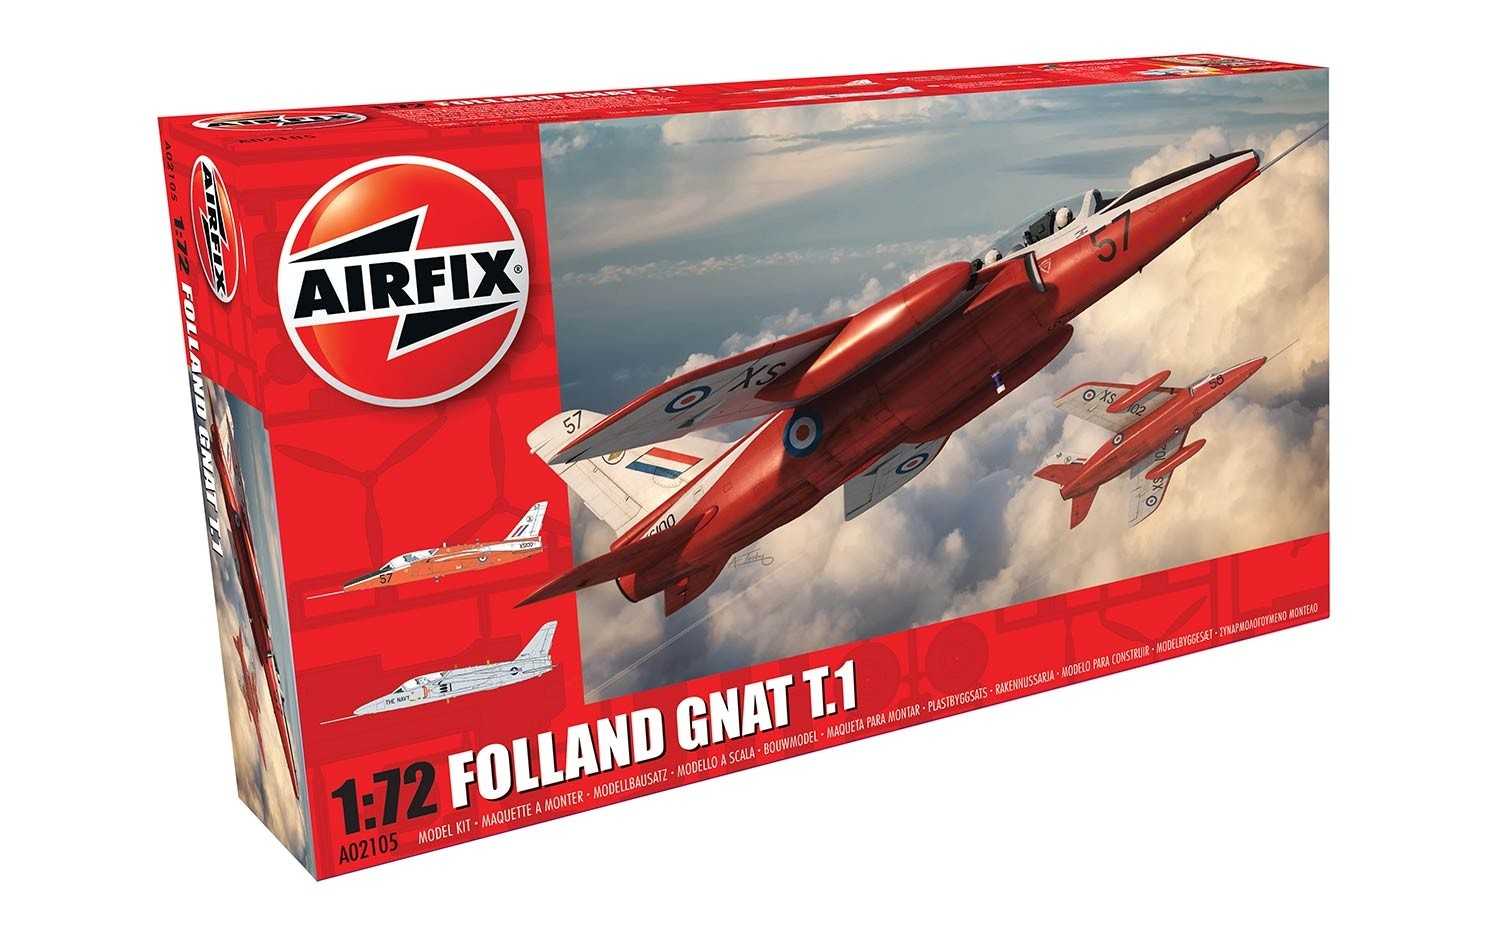 Airfix Classic Kit letadlo A02105 - Folland Gnat T.1 (1:72)